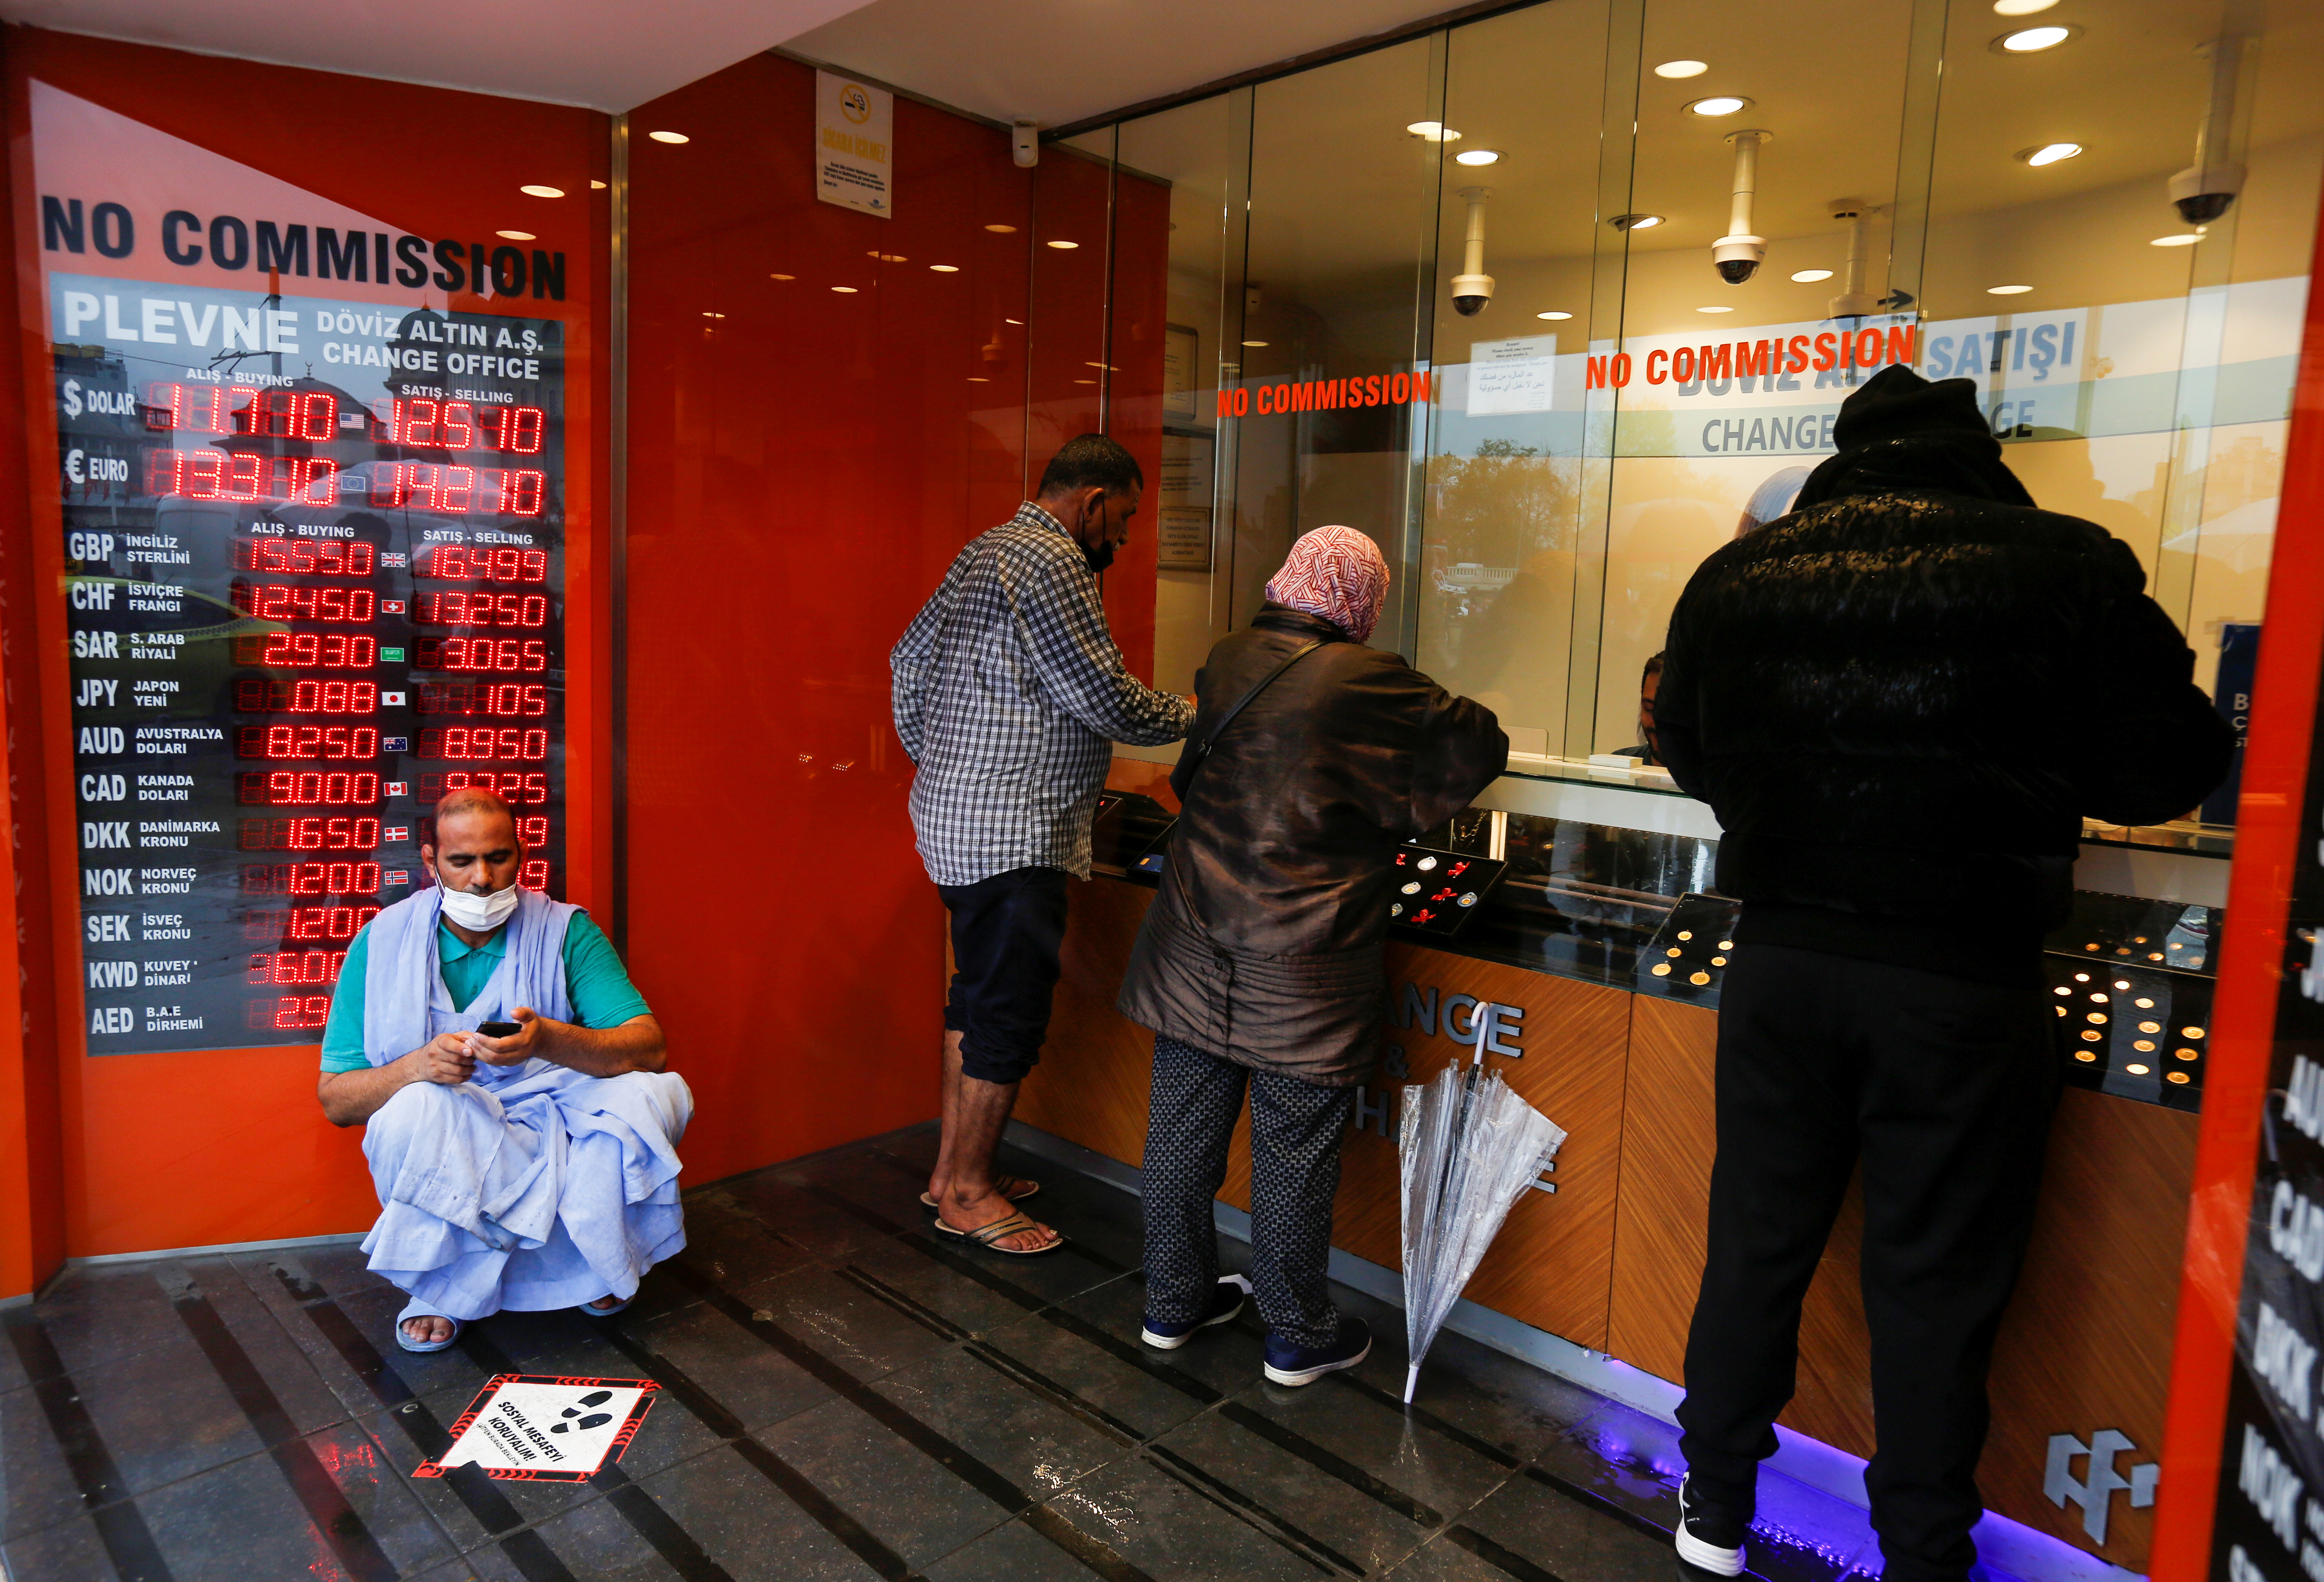 People change money at a currency exchange office in Istanbul, Turkey November 23, 2021. REUTERS/Dilara Senkaya